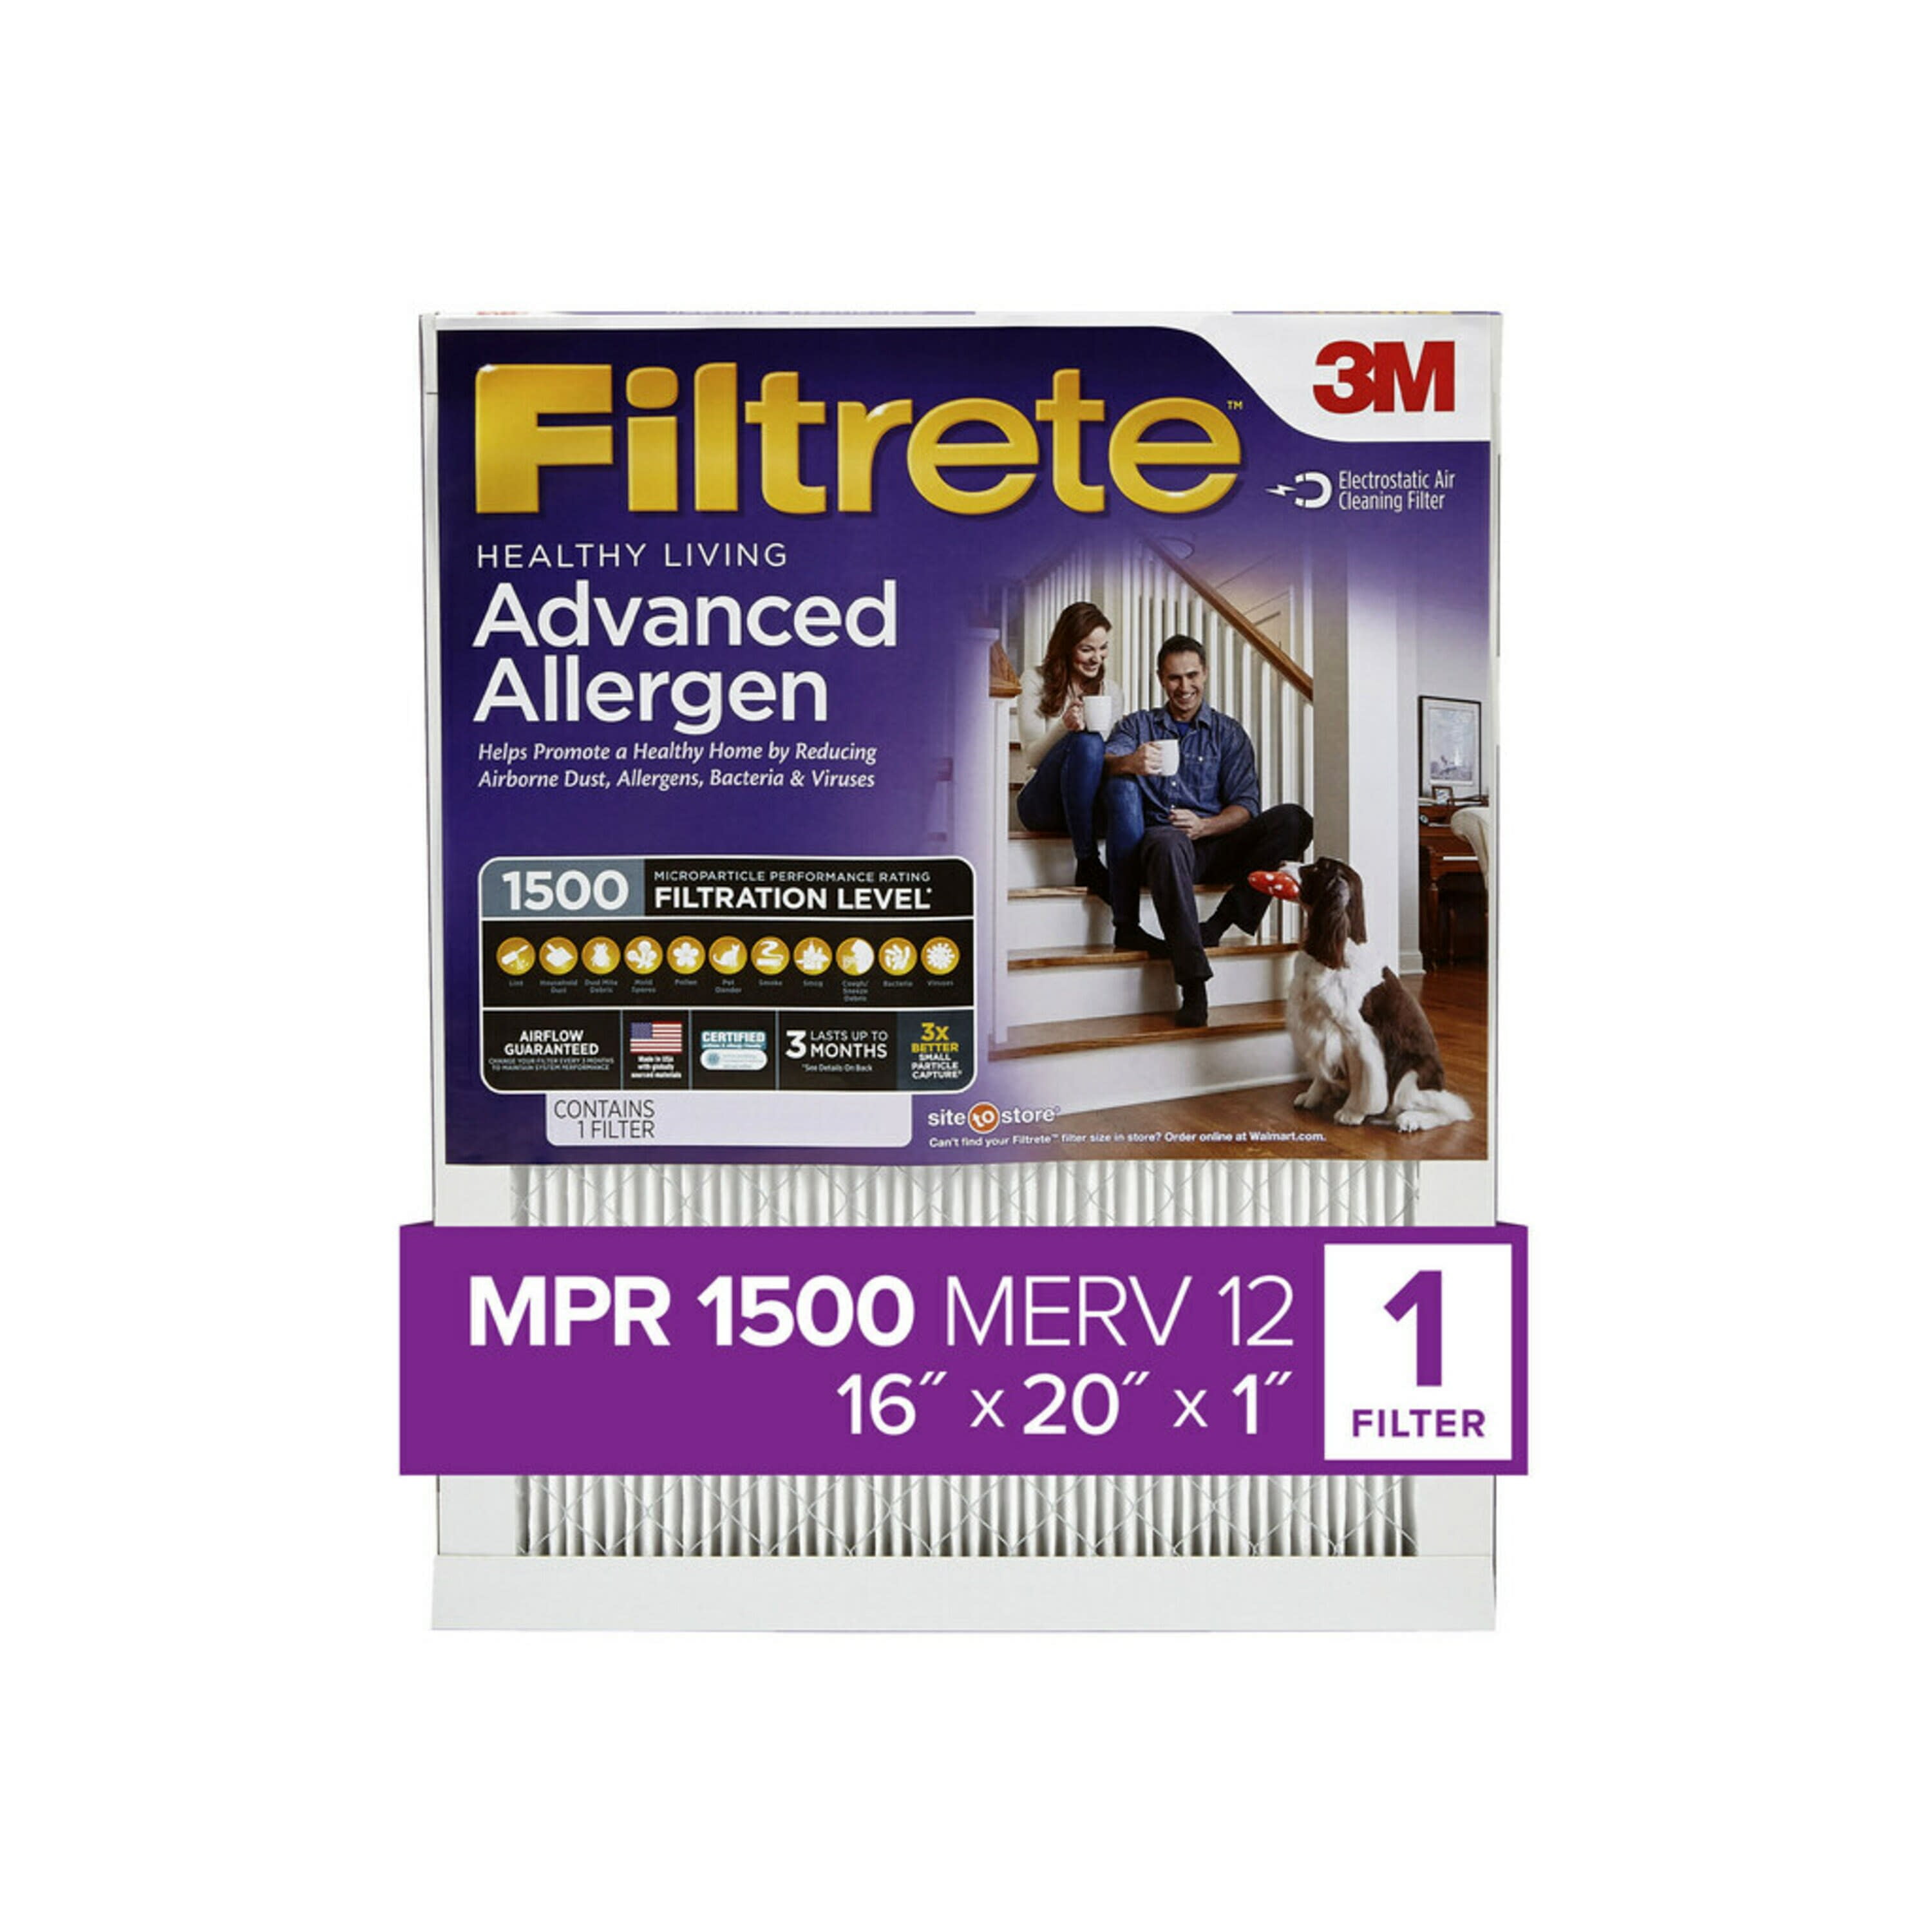 Filtrete by 3M, 16x20x1, MERV 12, Advanced Allergen Reduction HVAC Furnace Air Filter, Captures Allergens, Bacteria, Viruses, 1500 MPR, 1 Filter